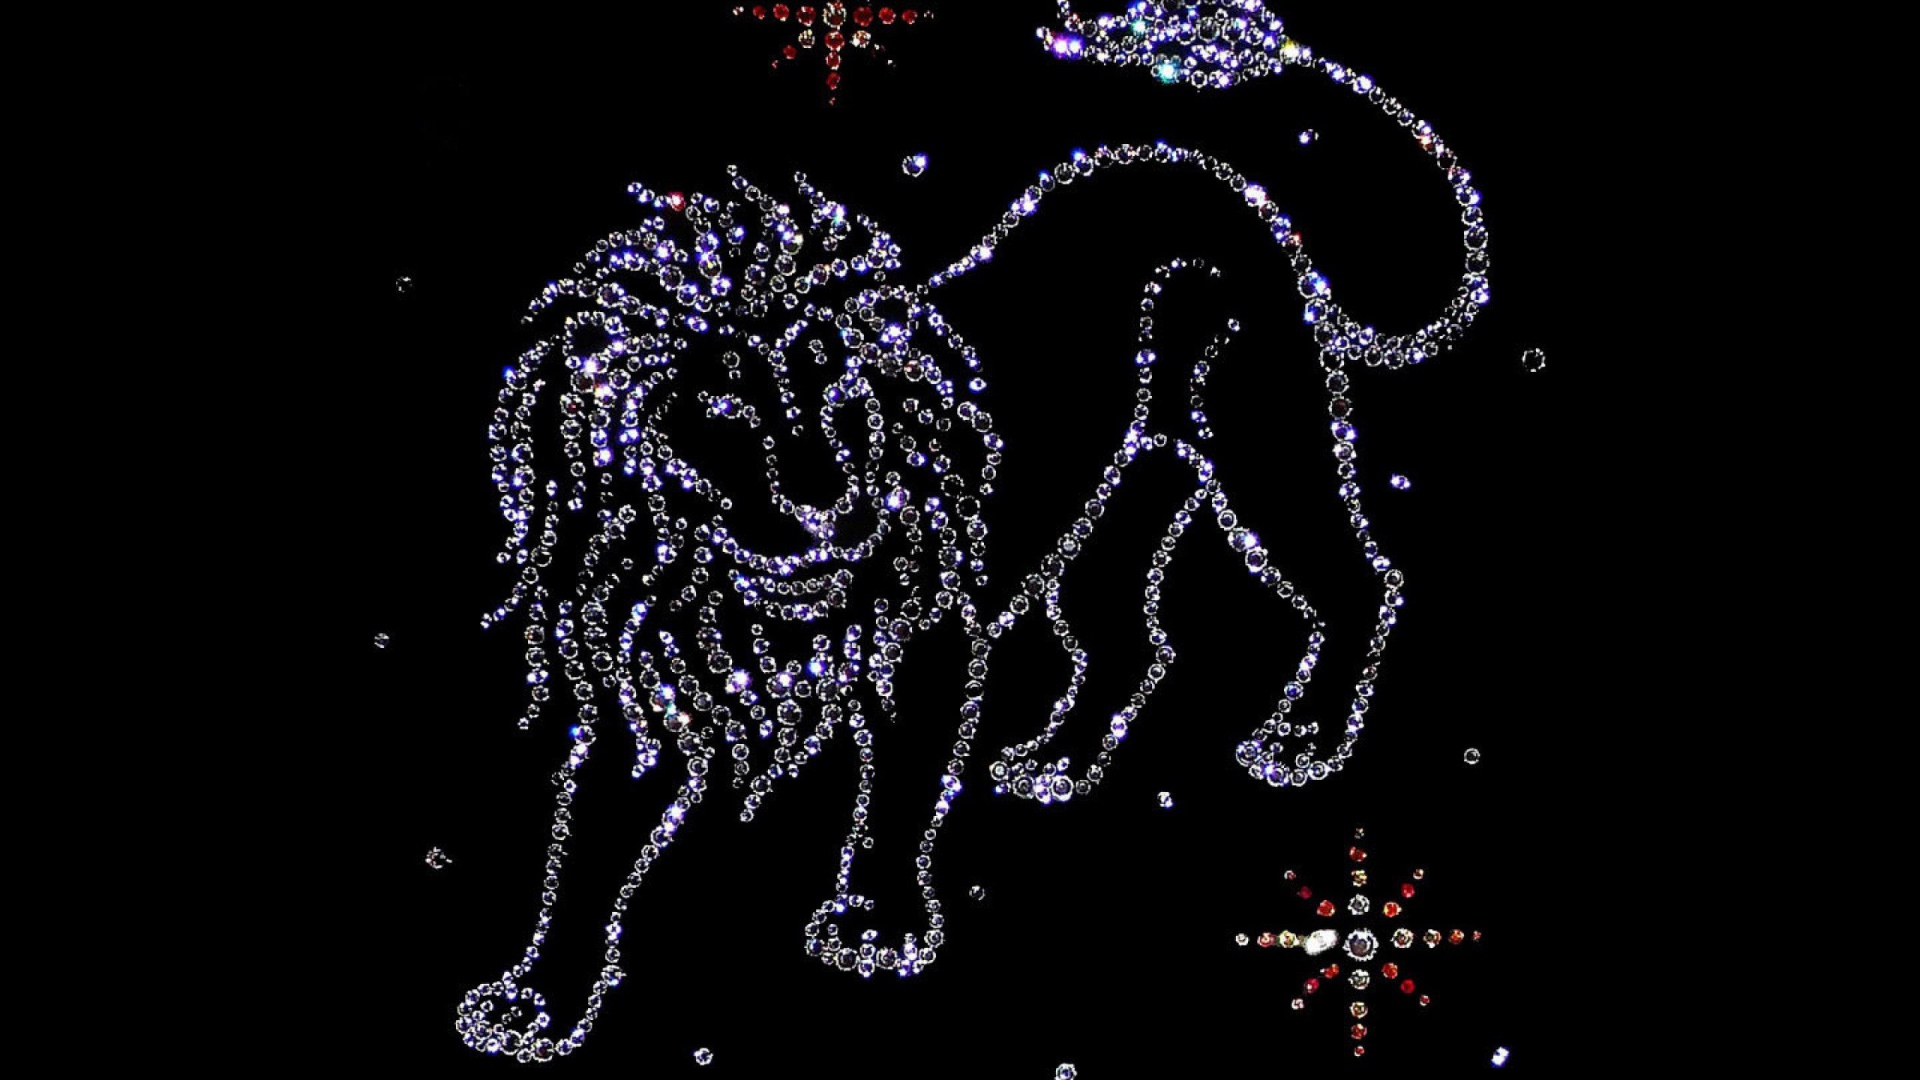 Brilliant zodiac sign Leo on a black background.